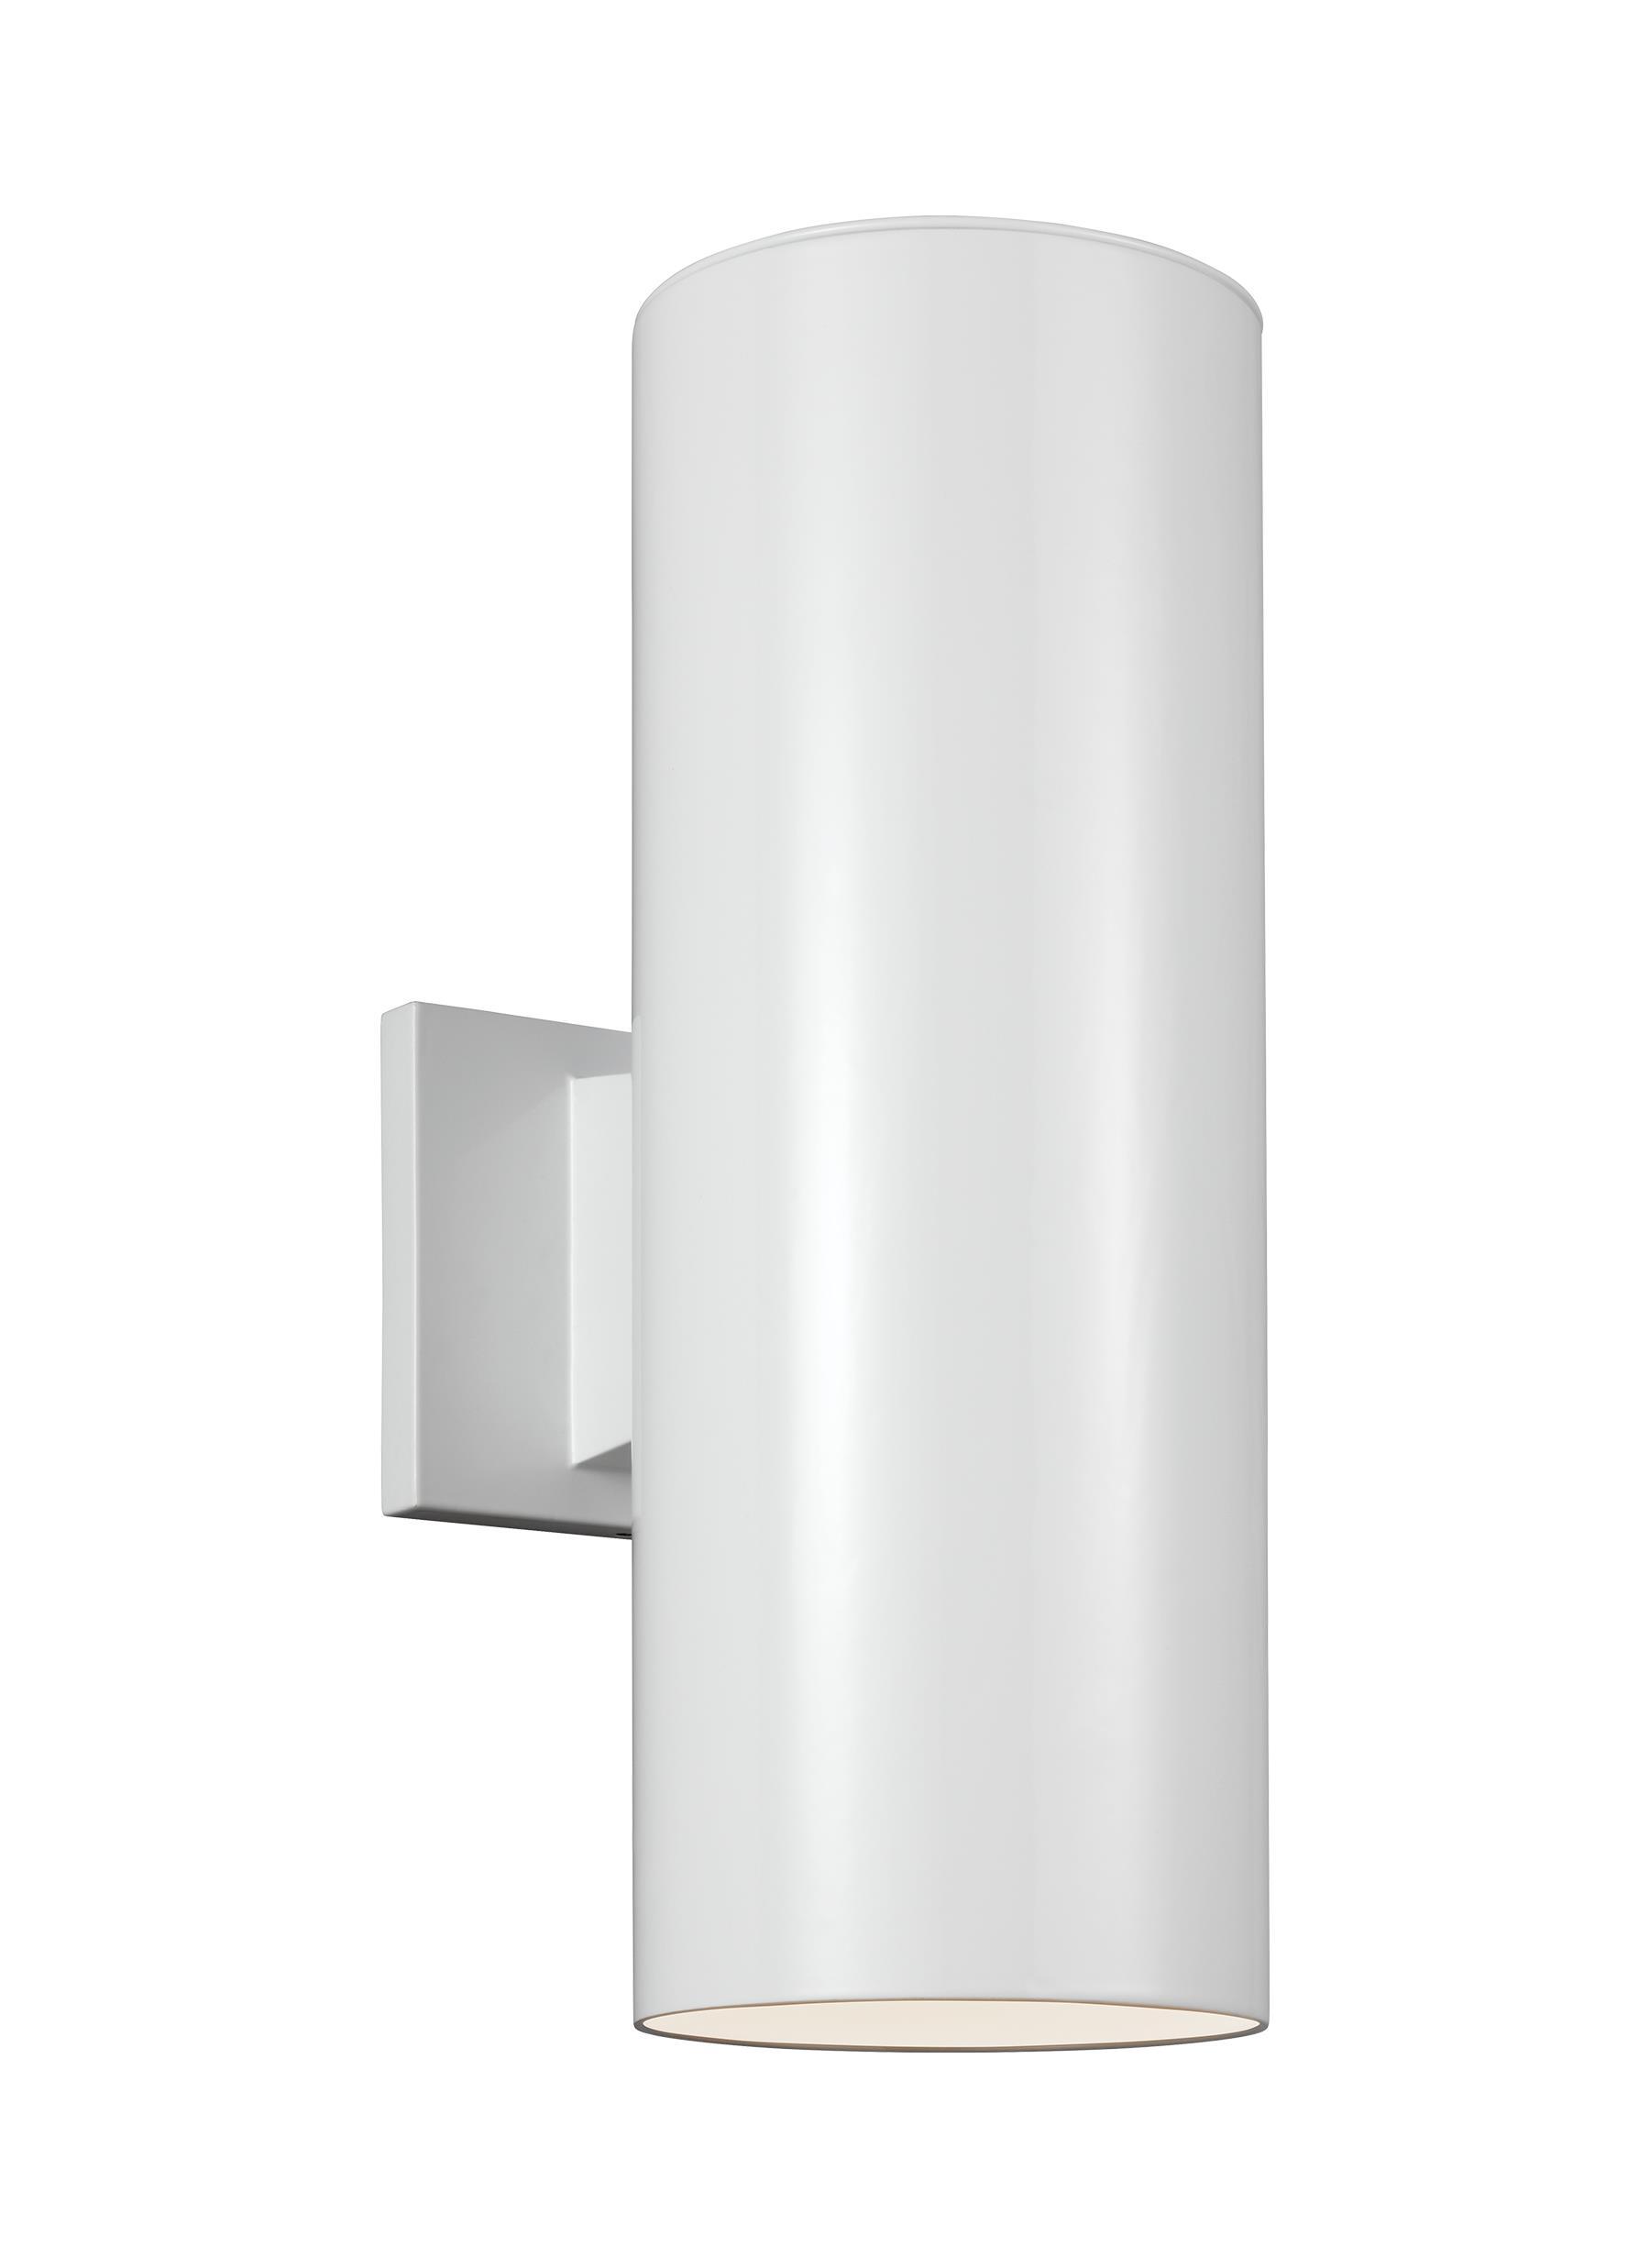 Small LED Wall Lantern - White Outdoor Sea Gull Lighting 